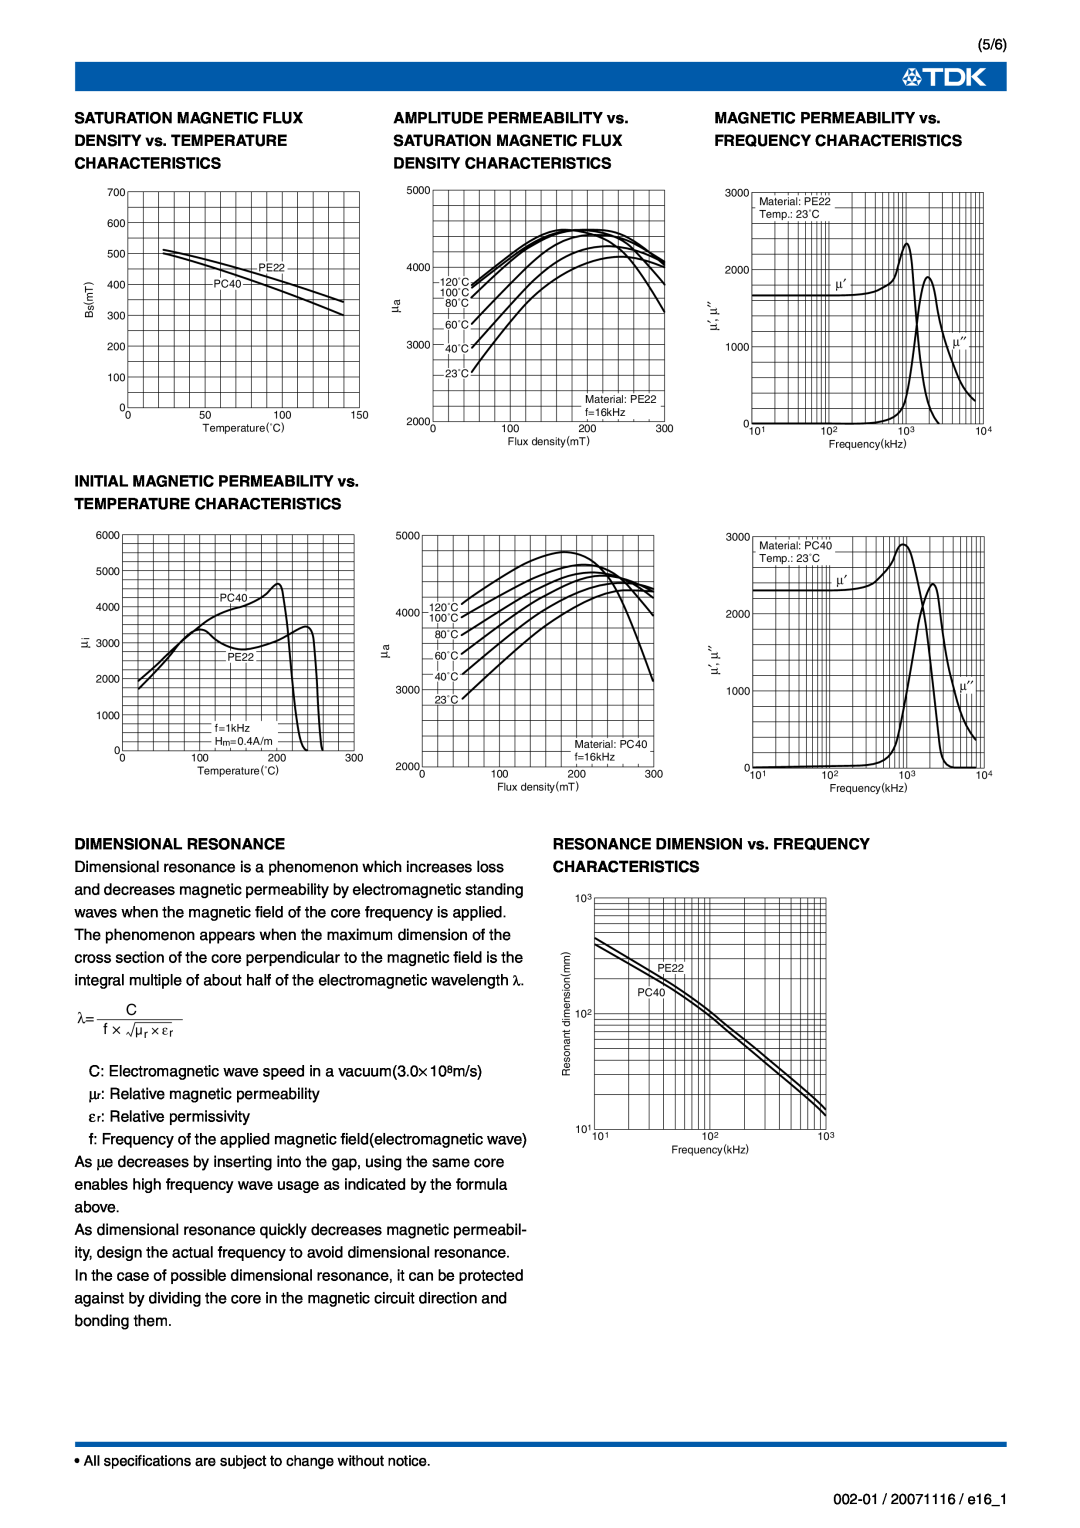 TDK EE320x250x20 specifications SATURATION MAGNETIC FLUX DENSITY vs. TEMPERATURE CHARACTERISTICS, Density Characteristics 